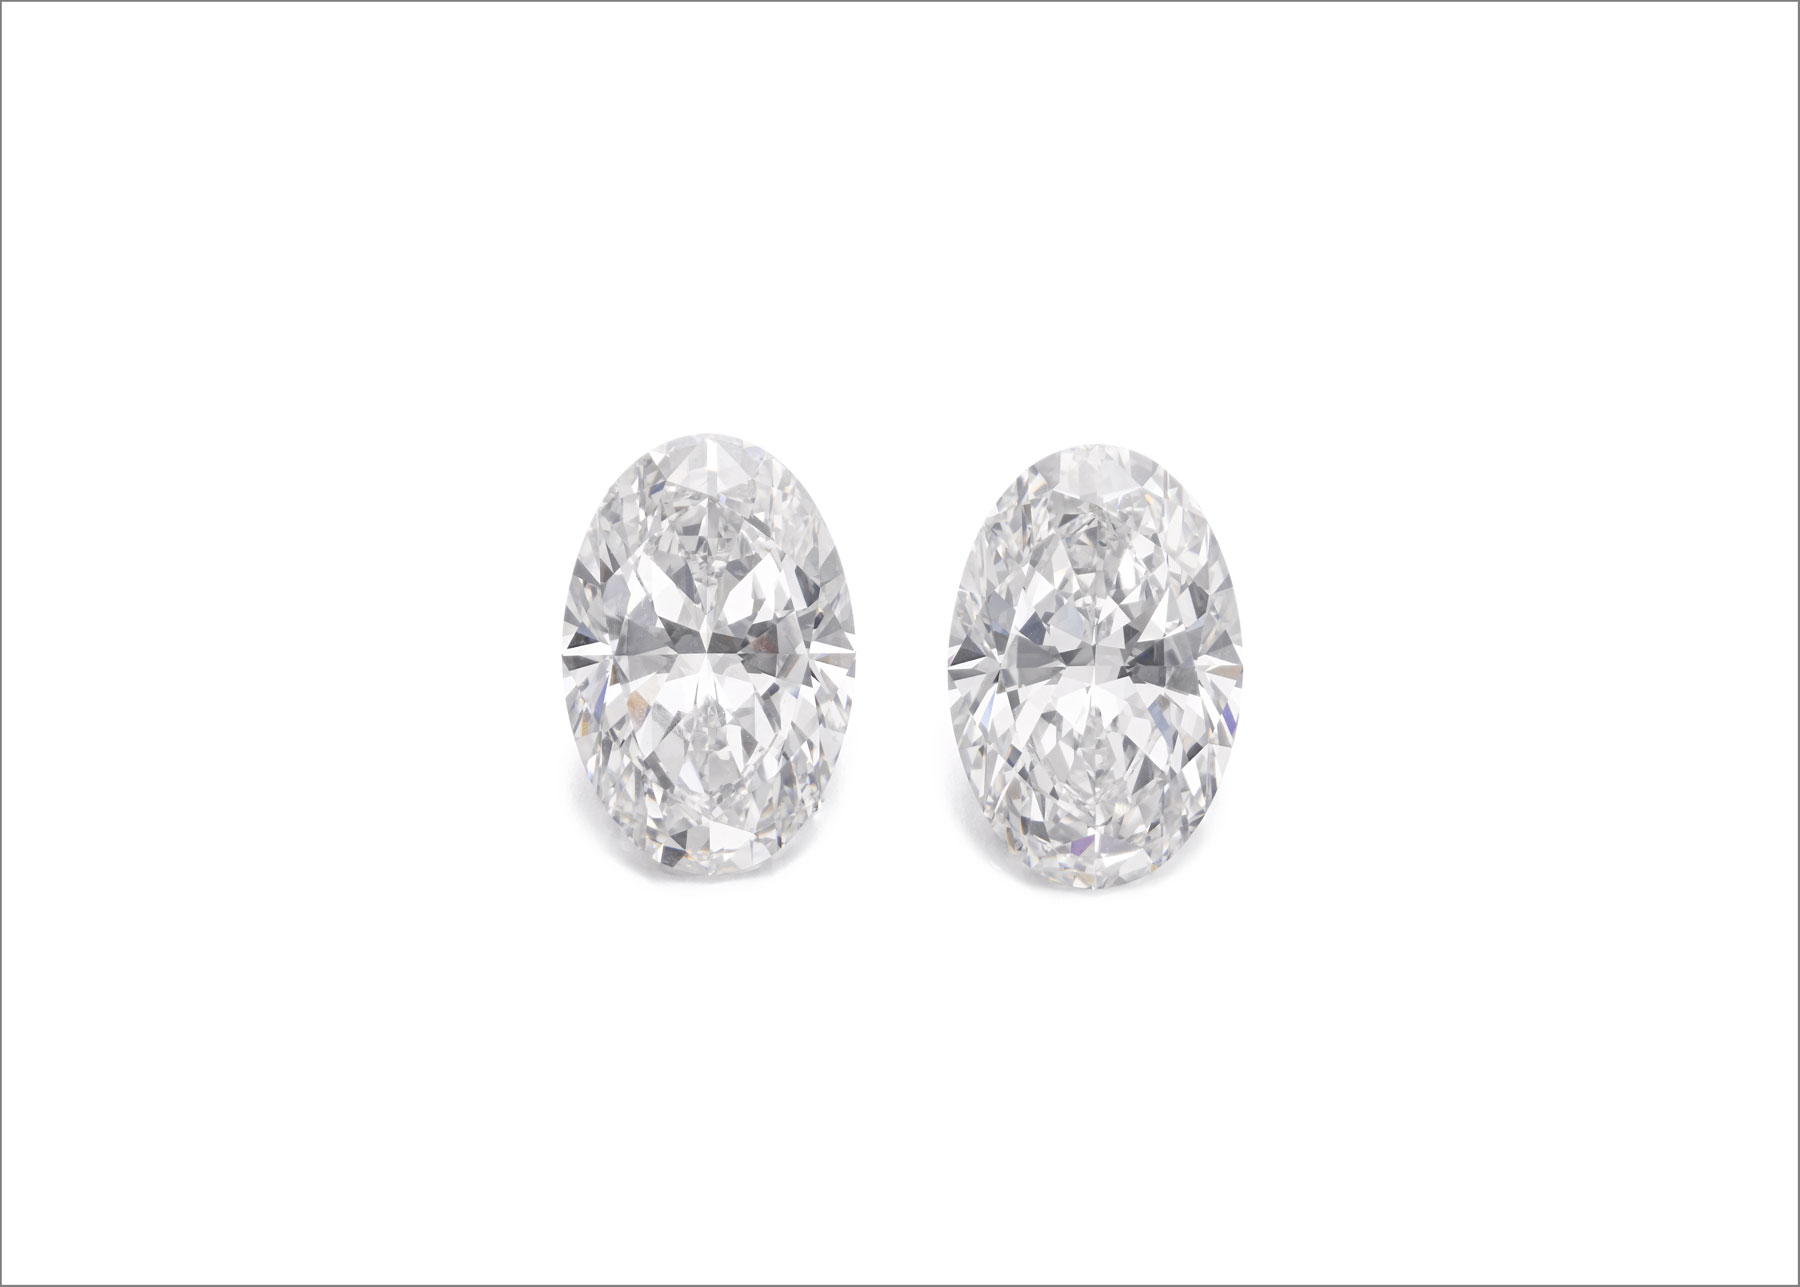 Coppia di diamanti ovali di 20.03 e 20.19 carati venduti per 4,2 milioni di dollari